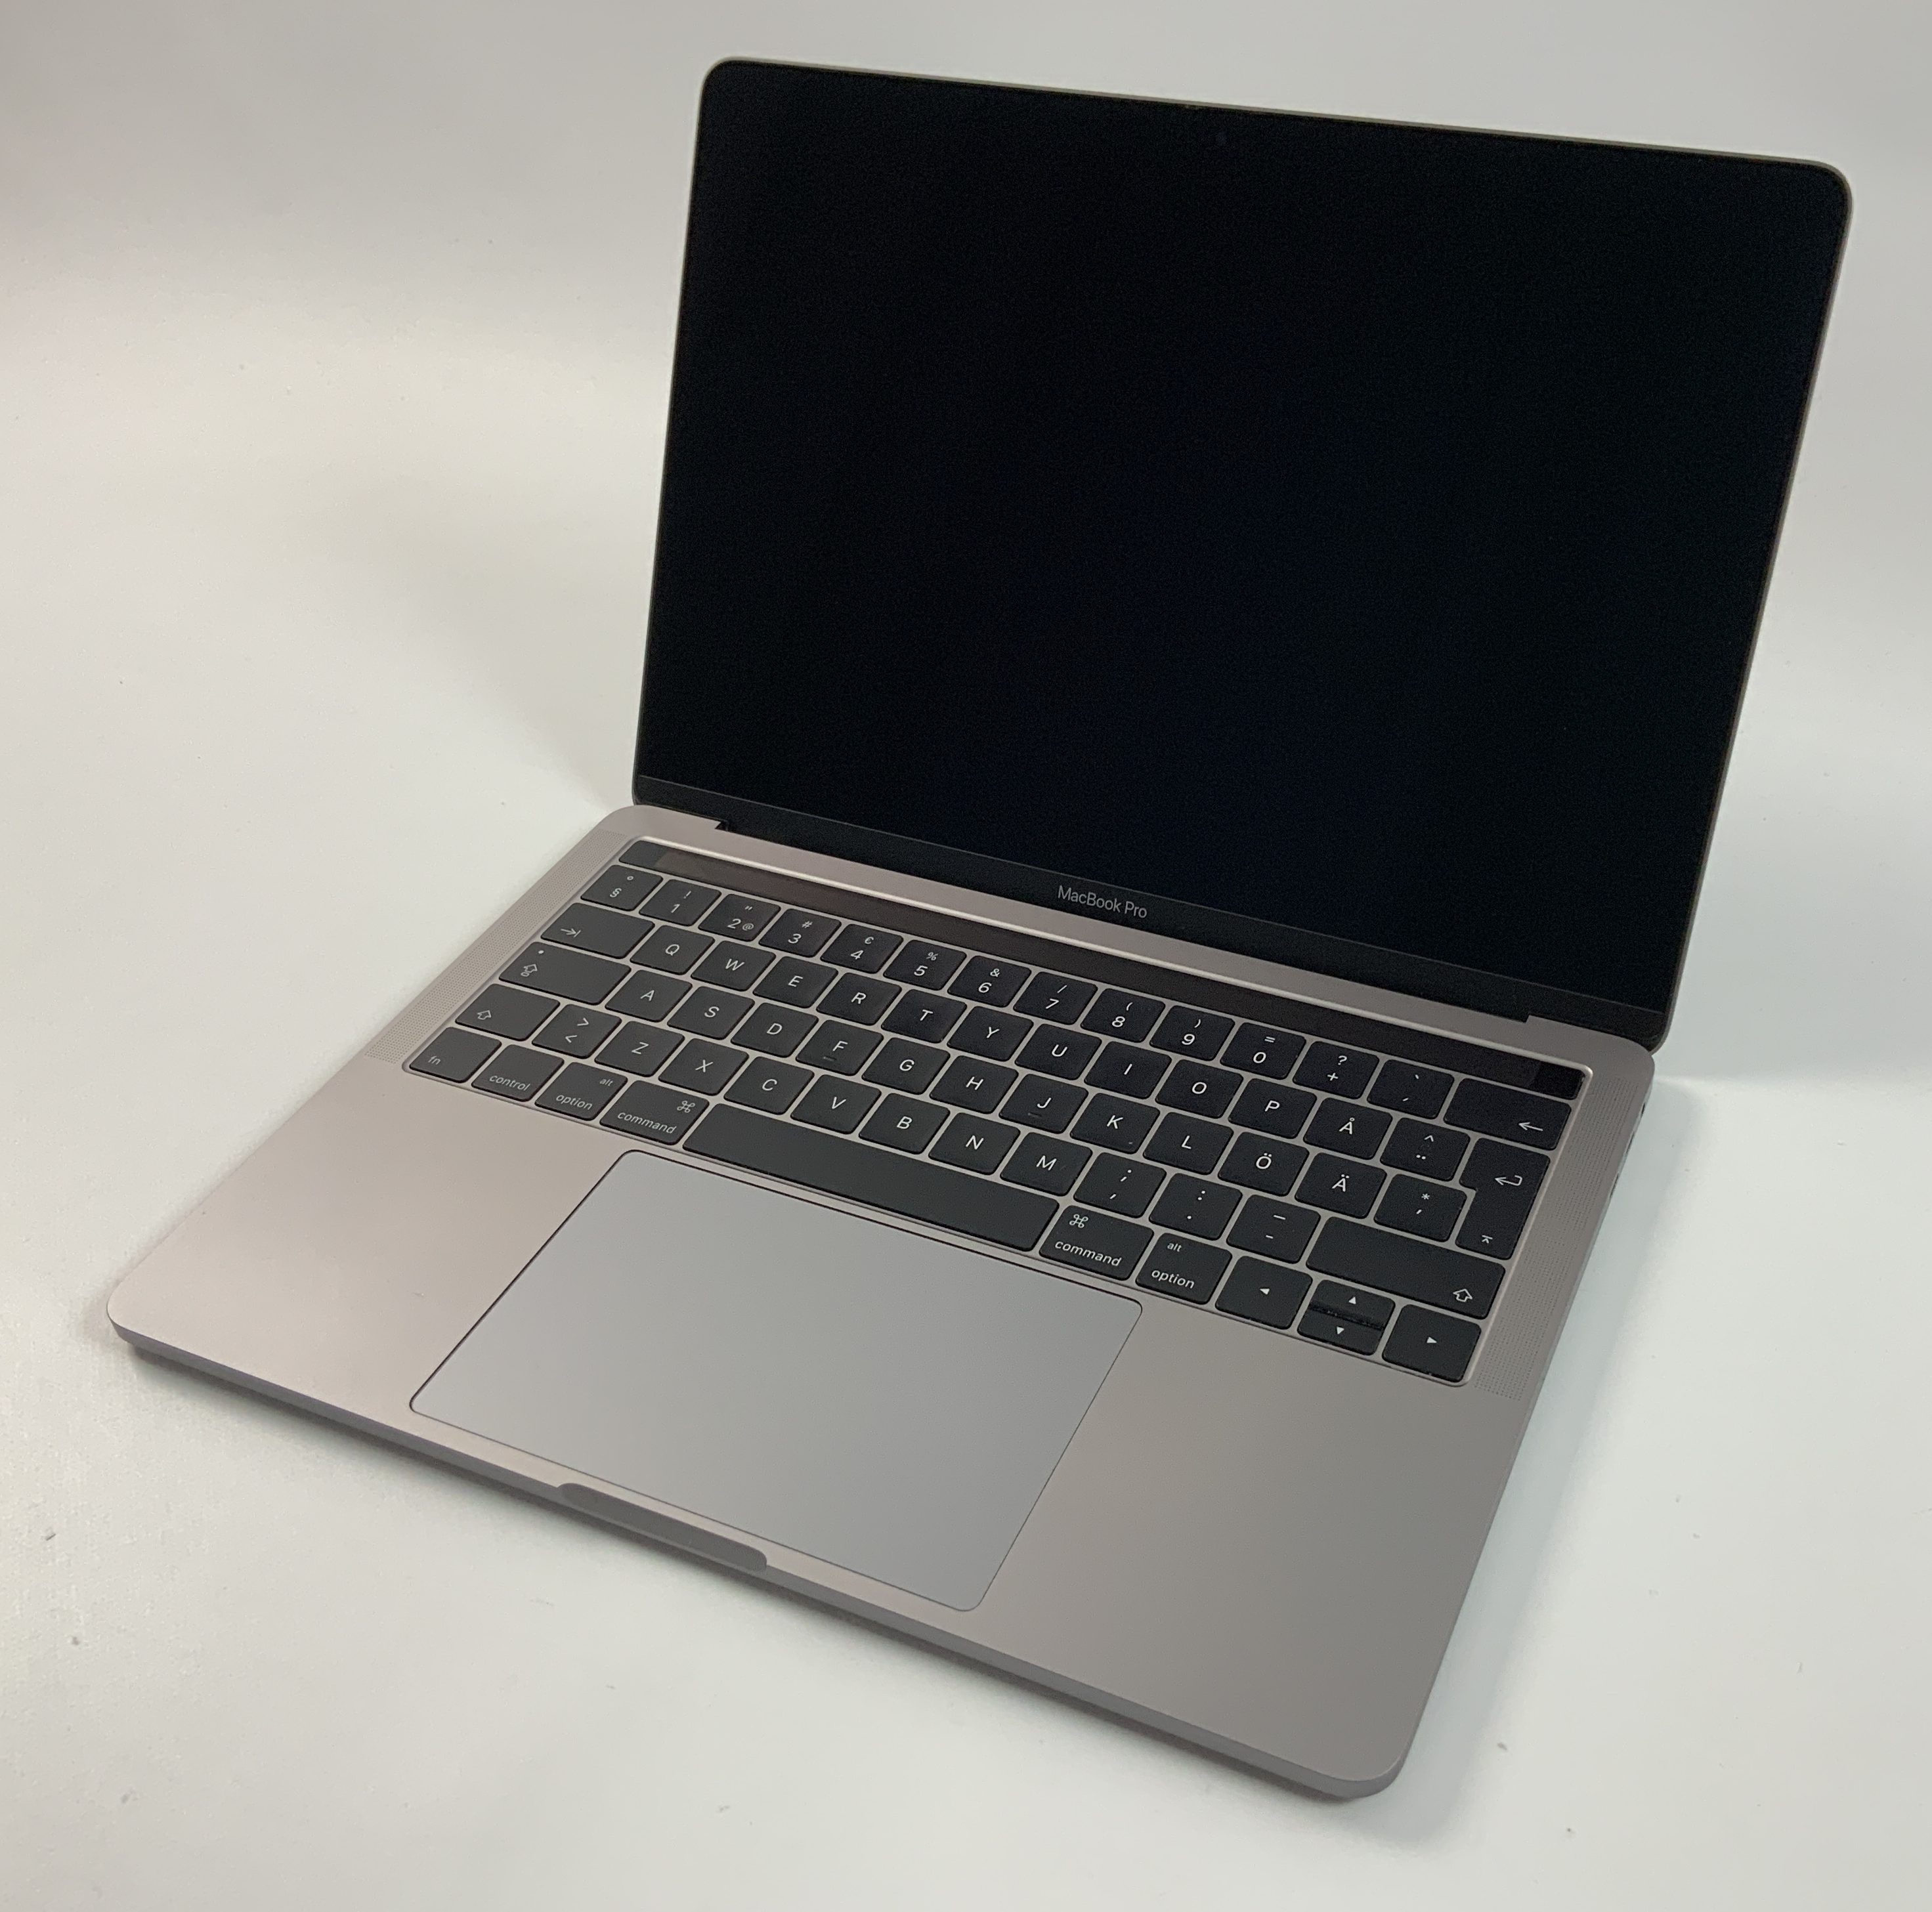 MacBook Pro 13" 4TBT Late 2016 (Intel Core i5 2.9 GHz 16 GB RAM 512 GB SSD), Space Gray, Intel Core i5 2.9 GHz, 16 GB RAM, 512 GB SSD, bild 1